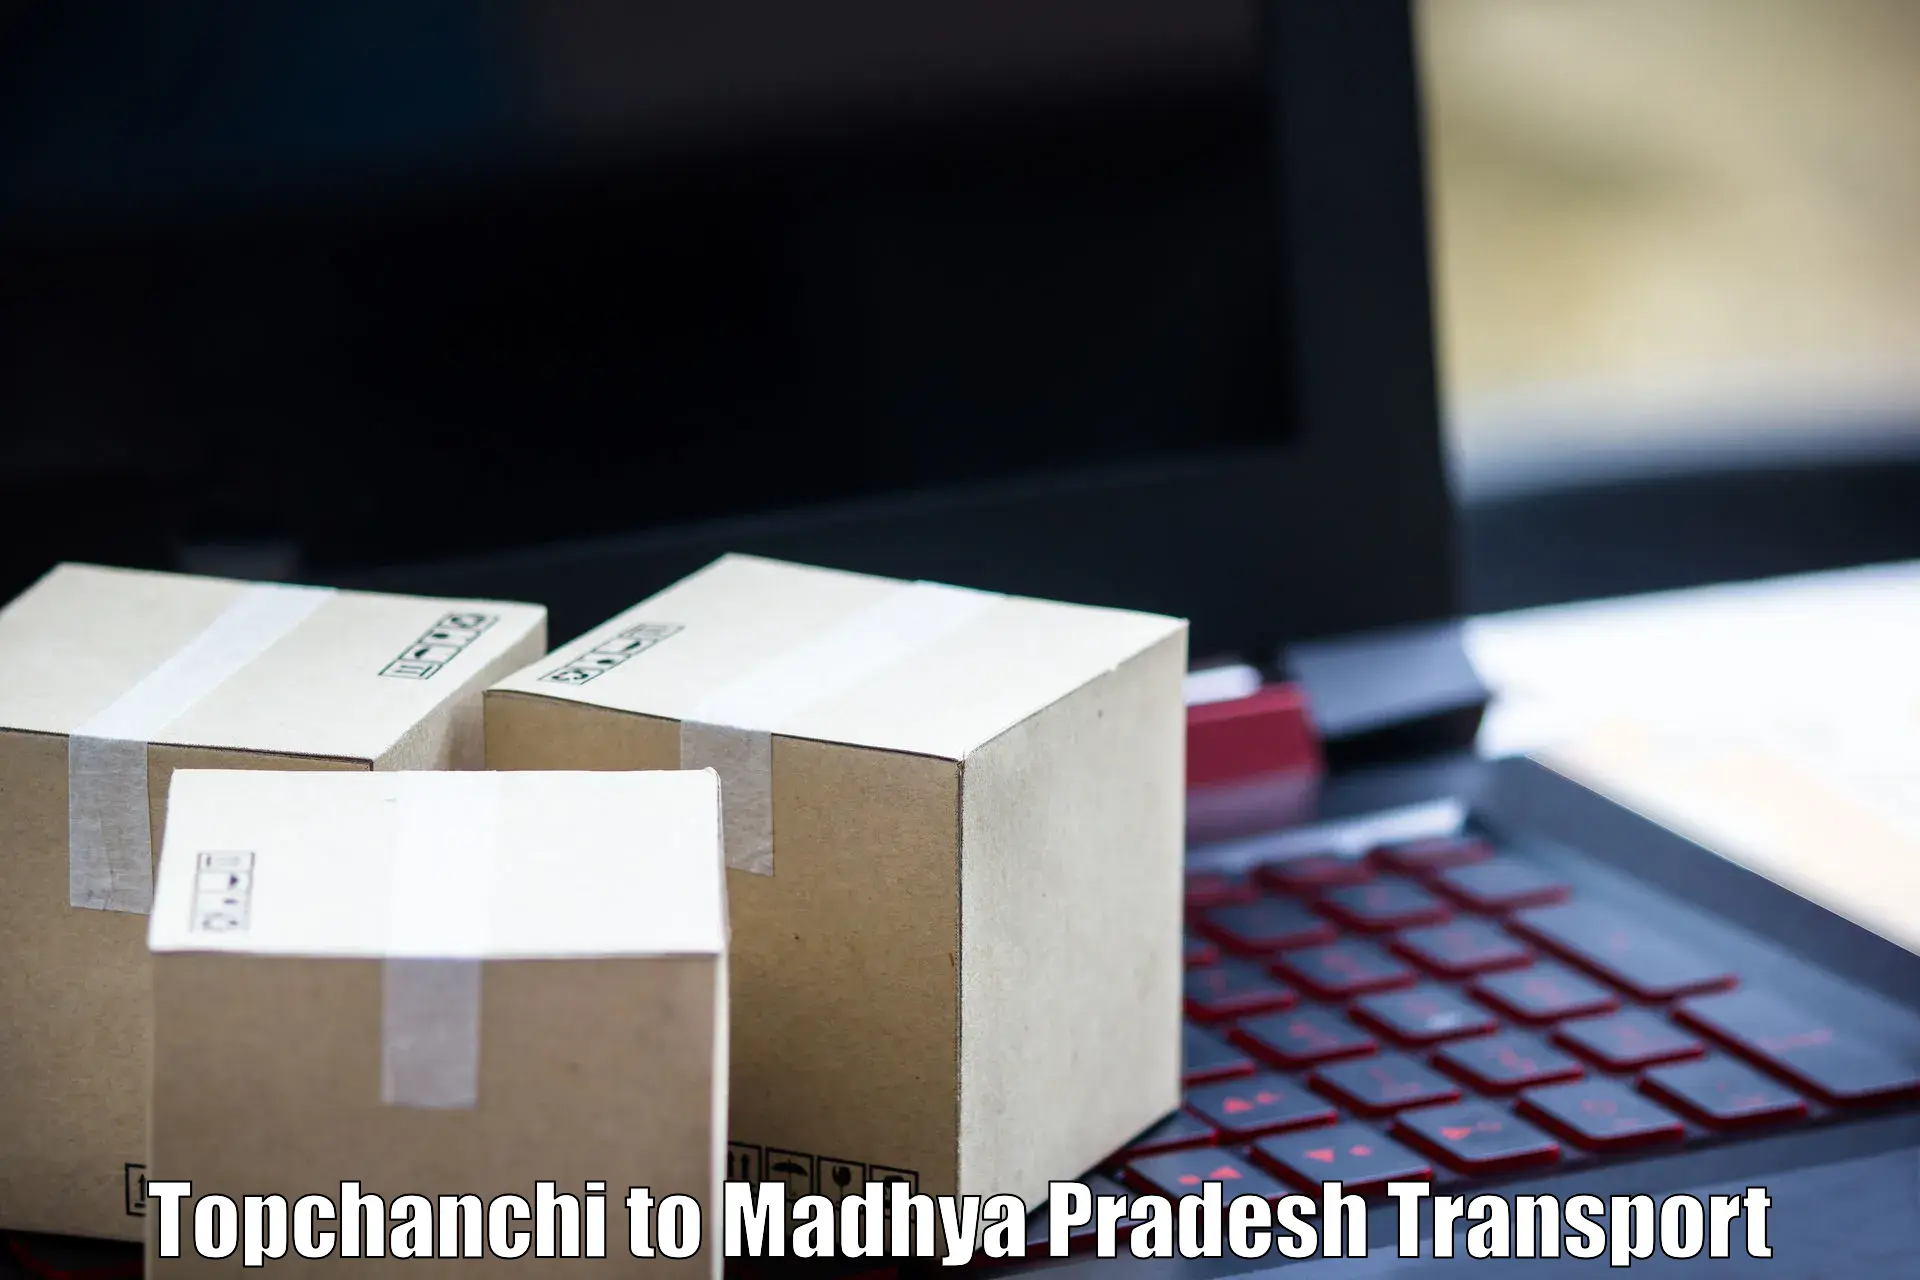 Pick up transport service Topchanchi to Pithampur